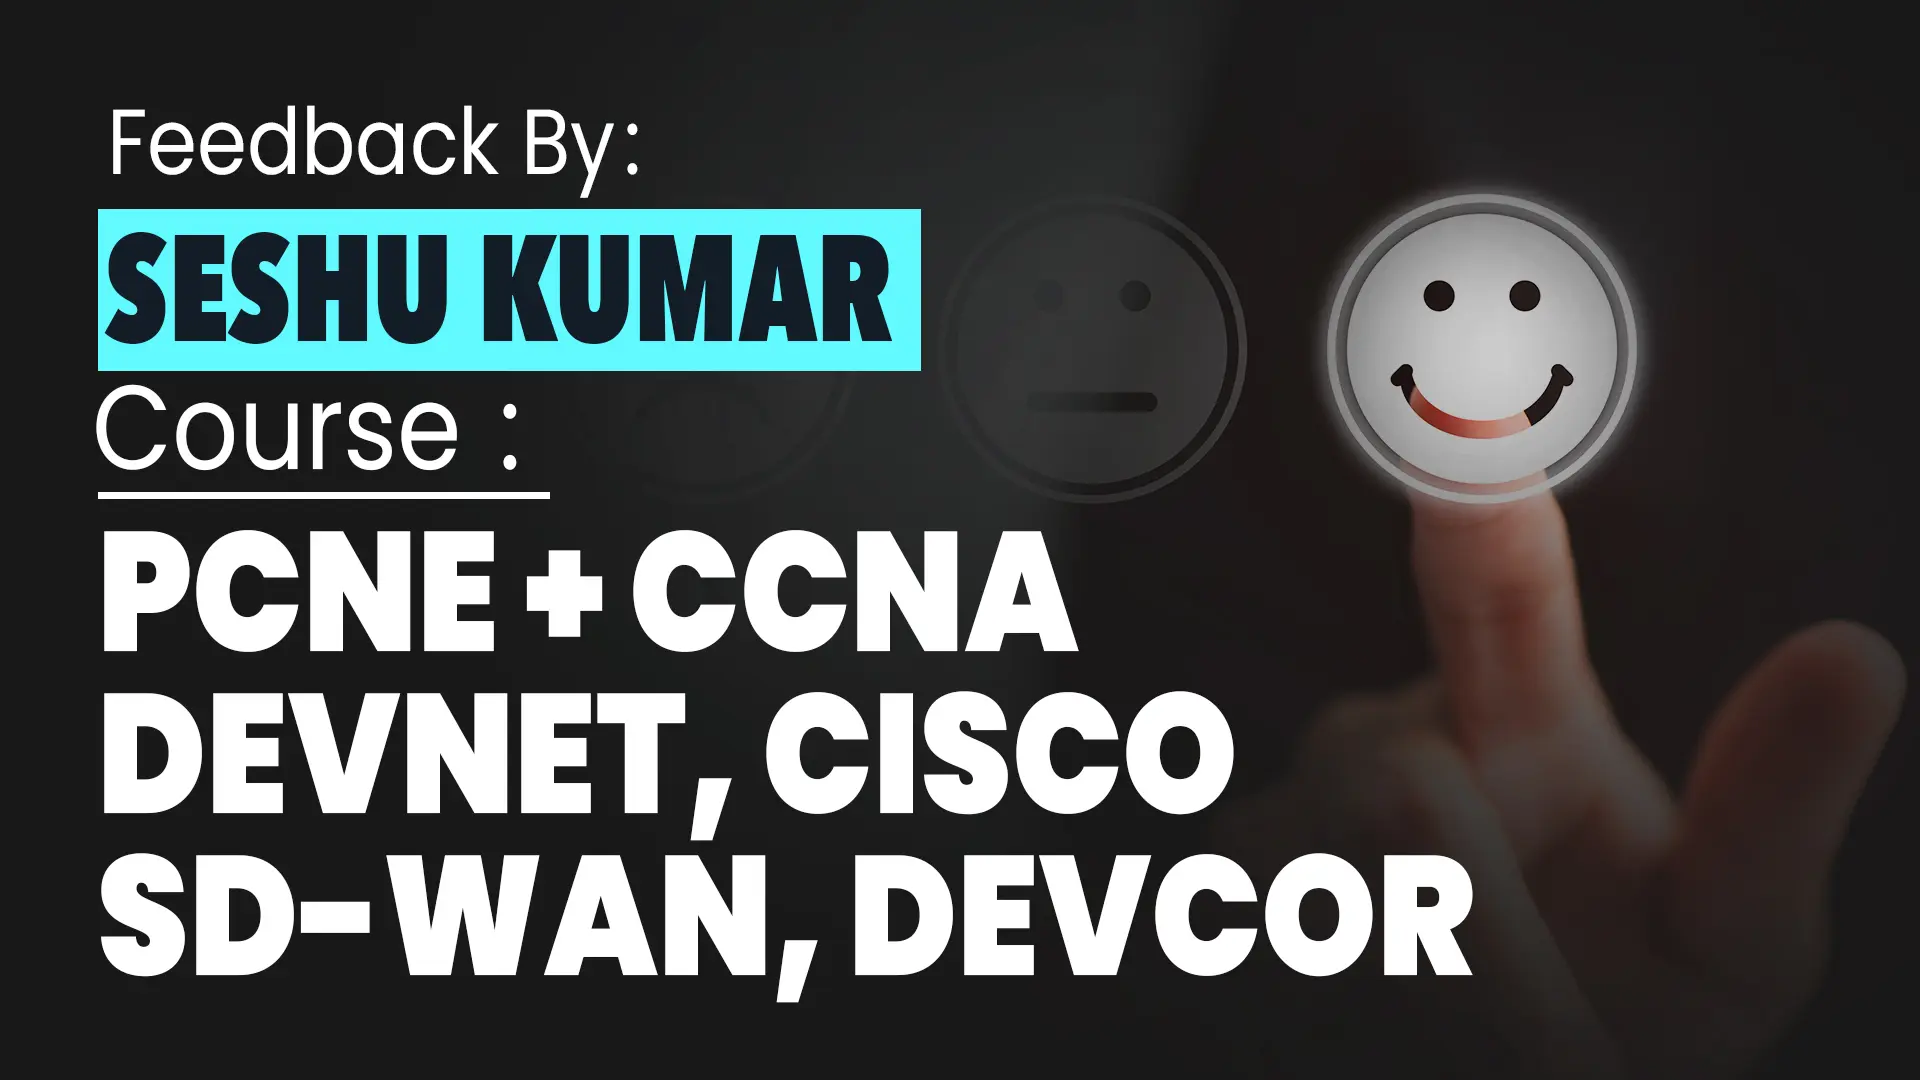 Feedback from Seshu-Kumar for PCNE + CCNA DevnetSD-WAN course